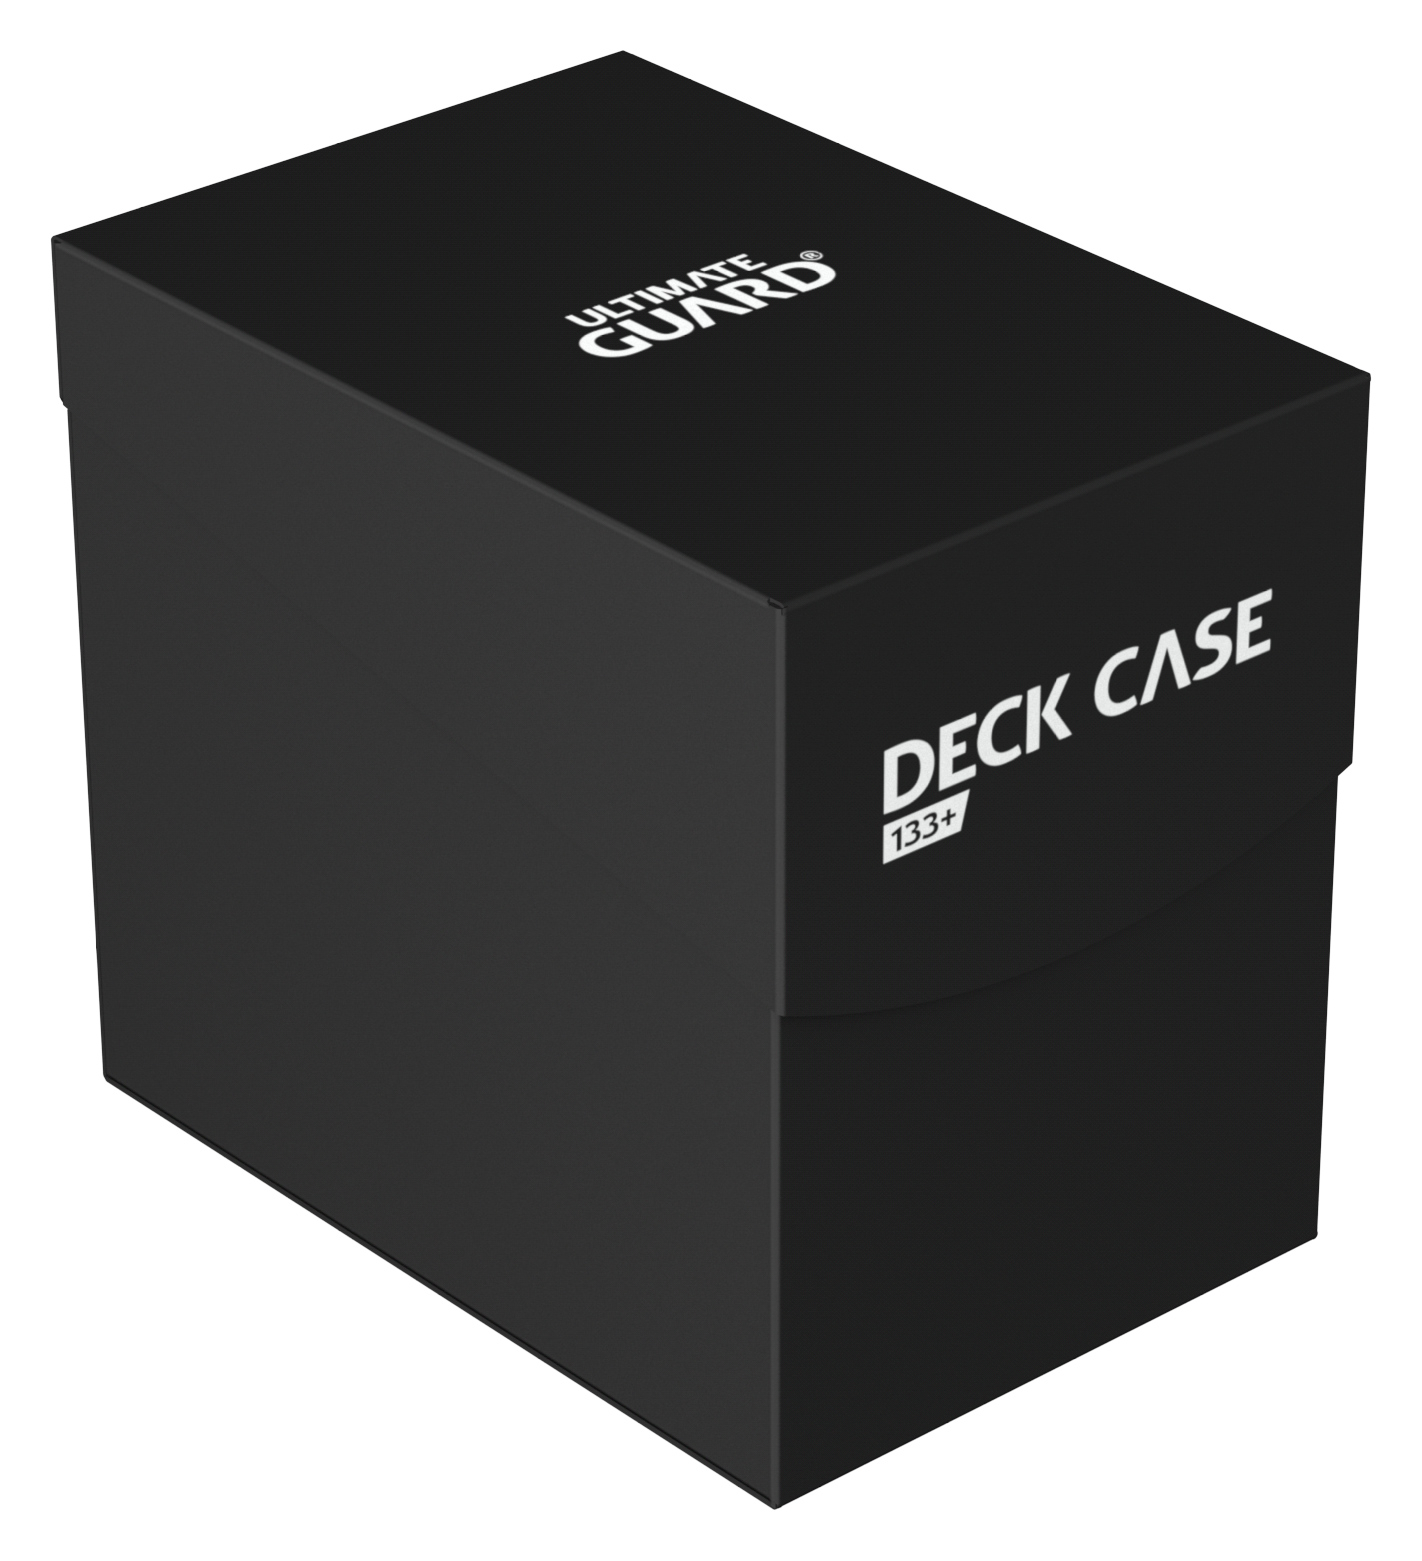 Ultimate Guard Card Deck Box Deck Case 133+ Black Schwarz